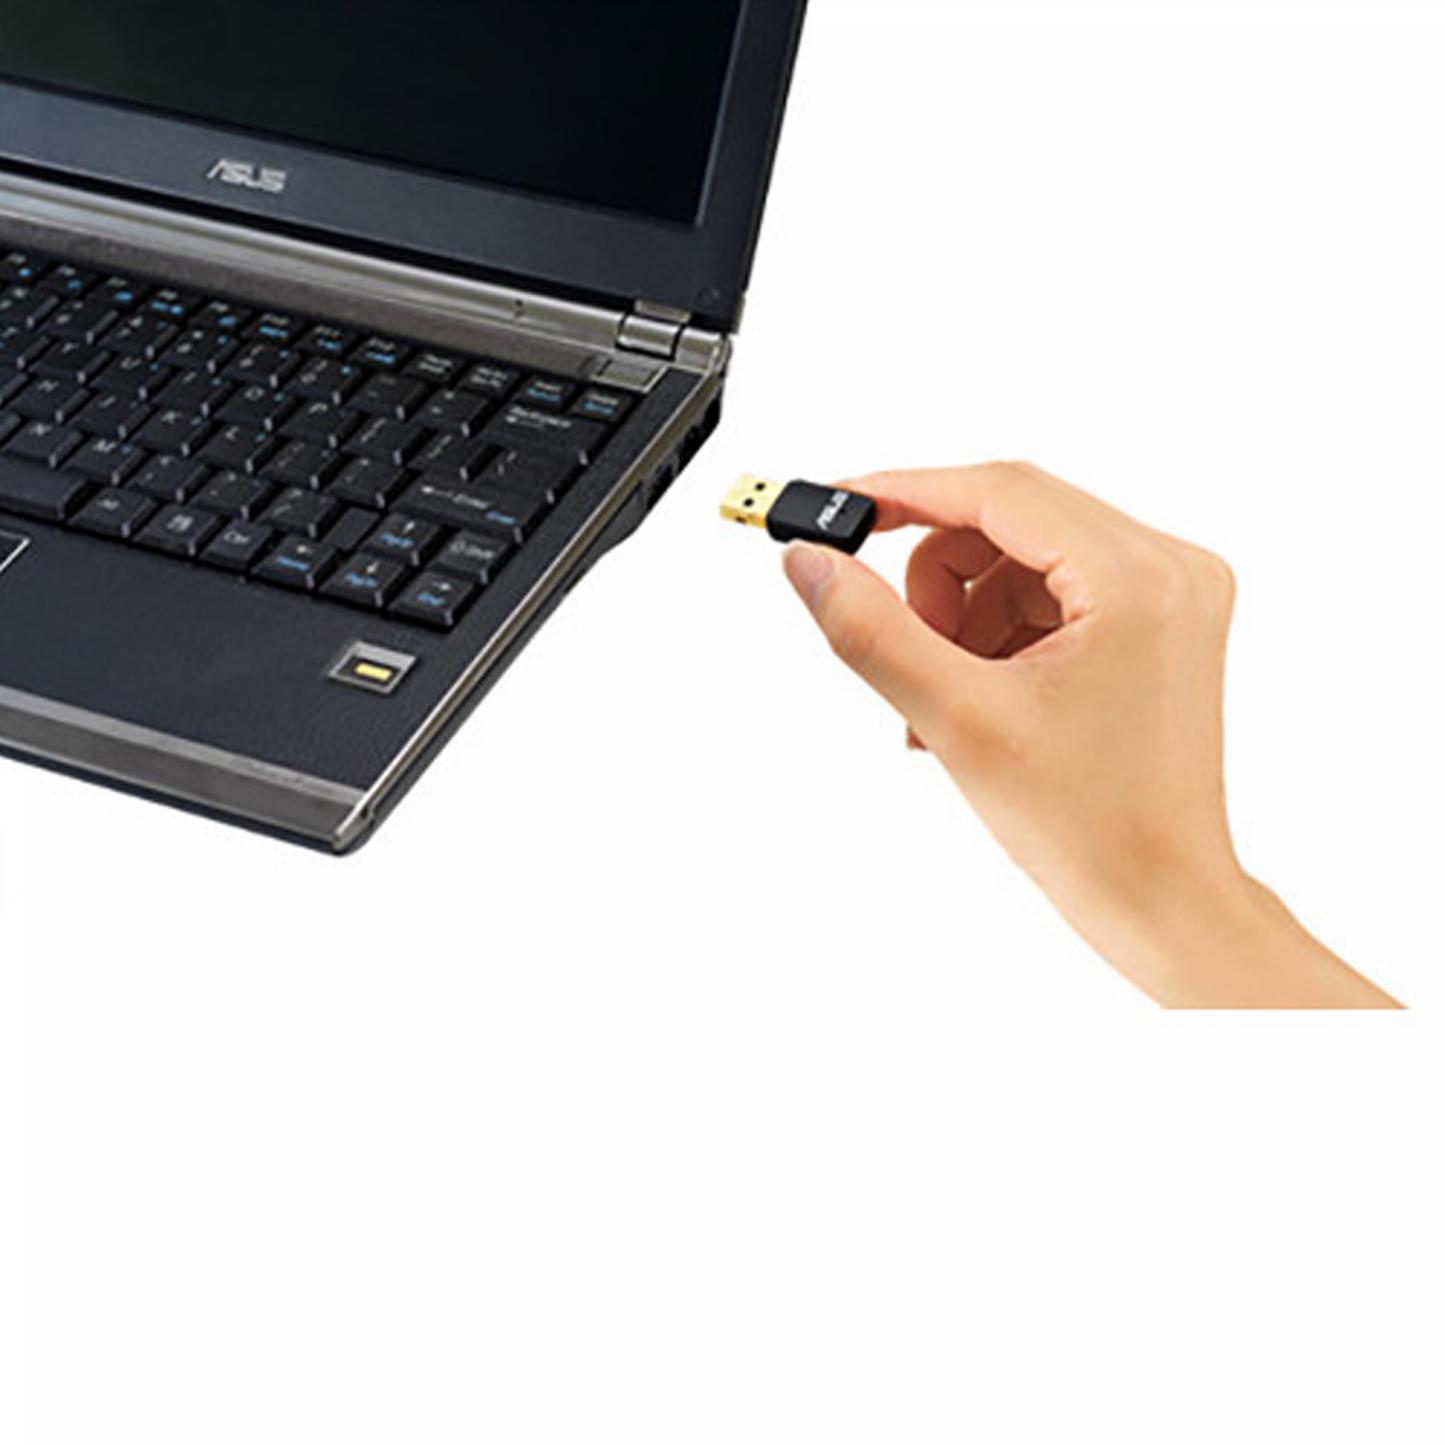 ASUS USB-N13 C1 Wireless-N300 USB Adapter